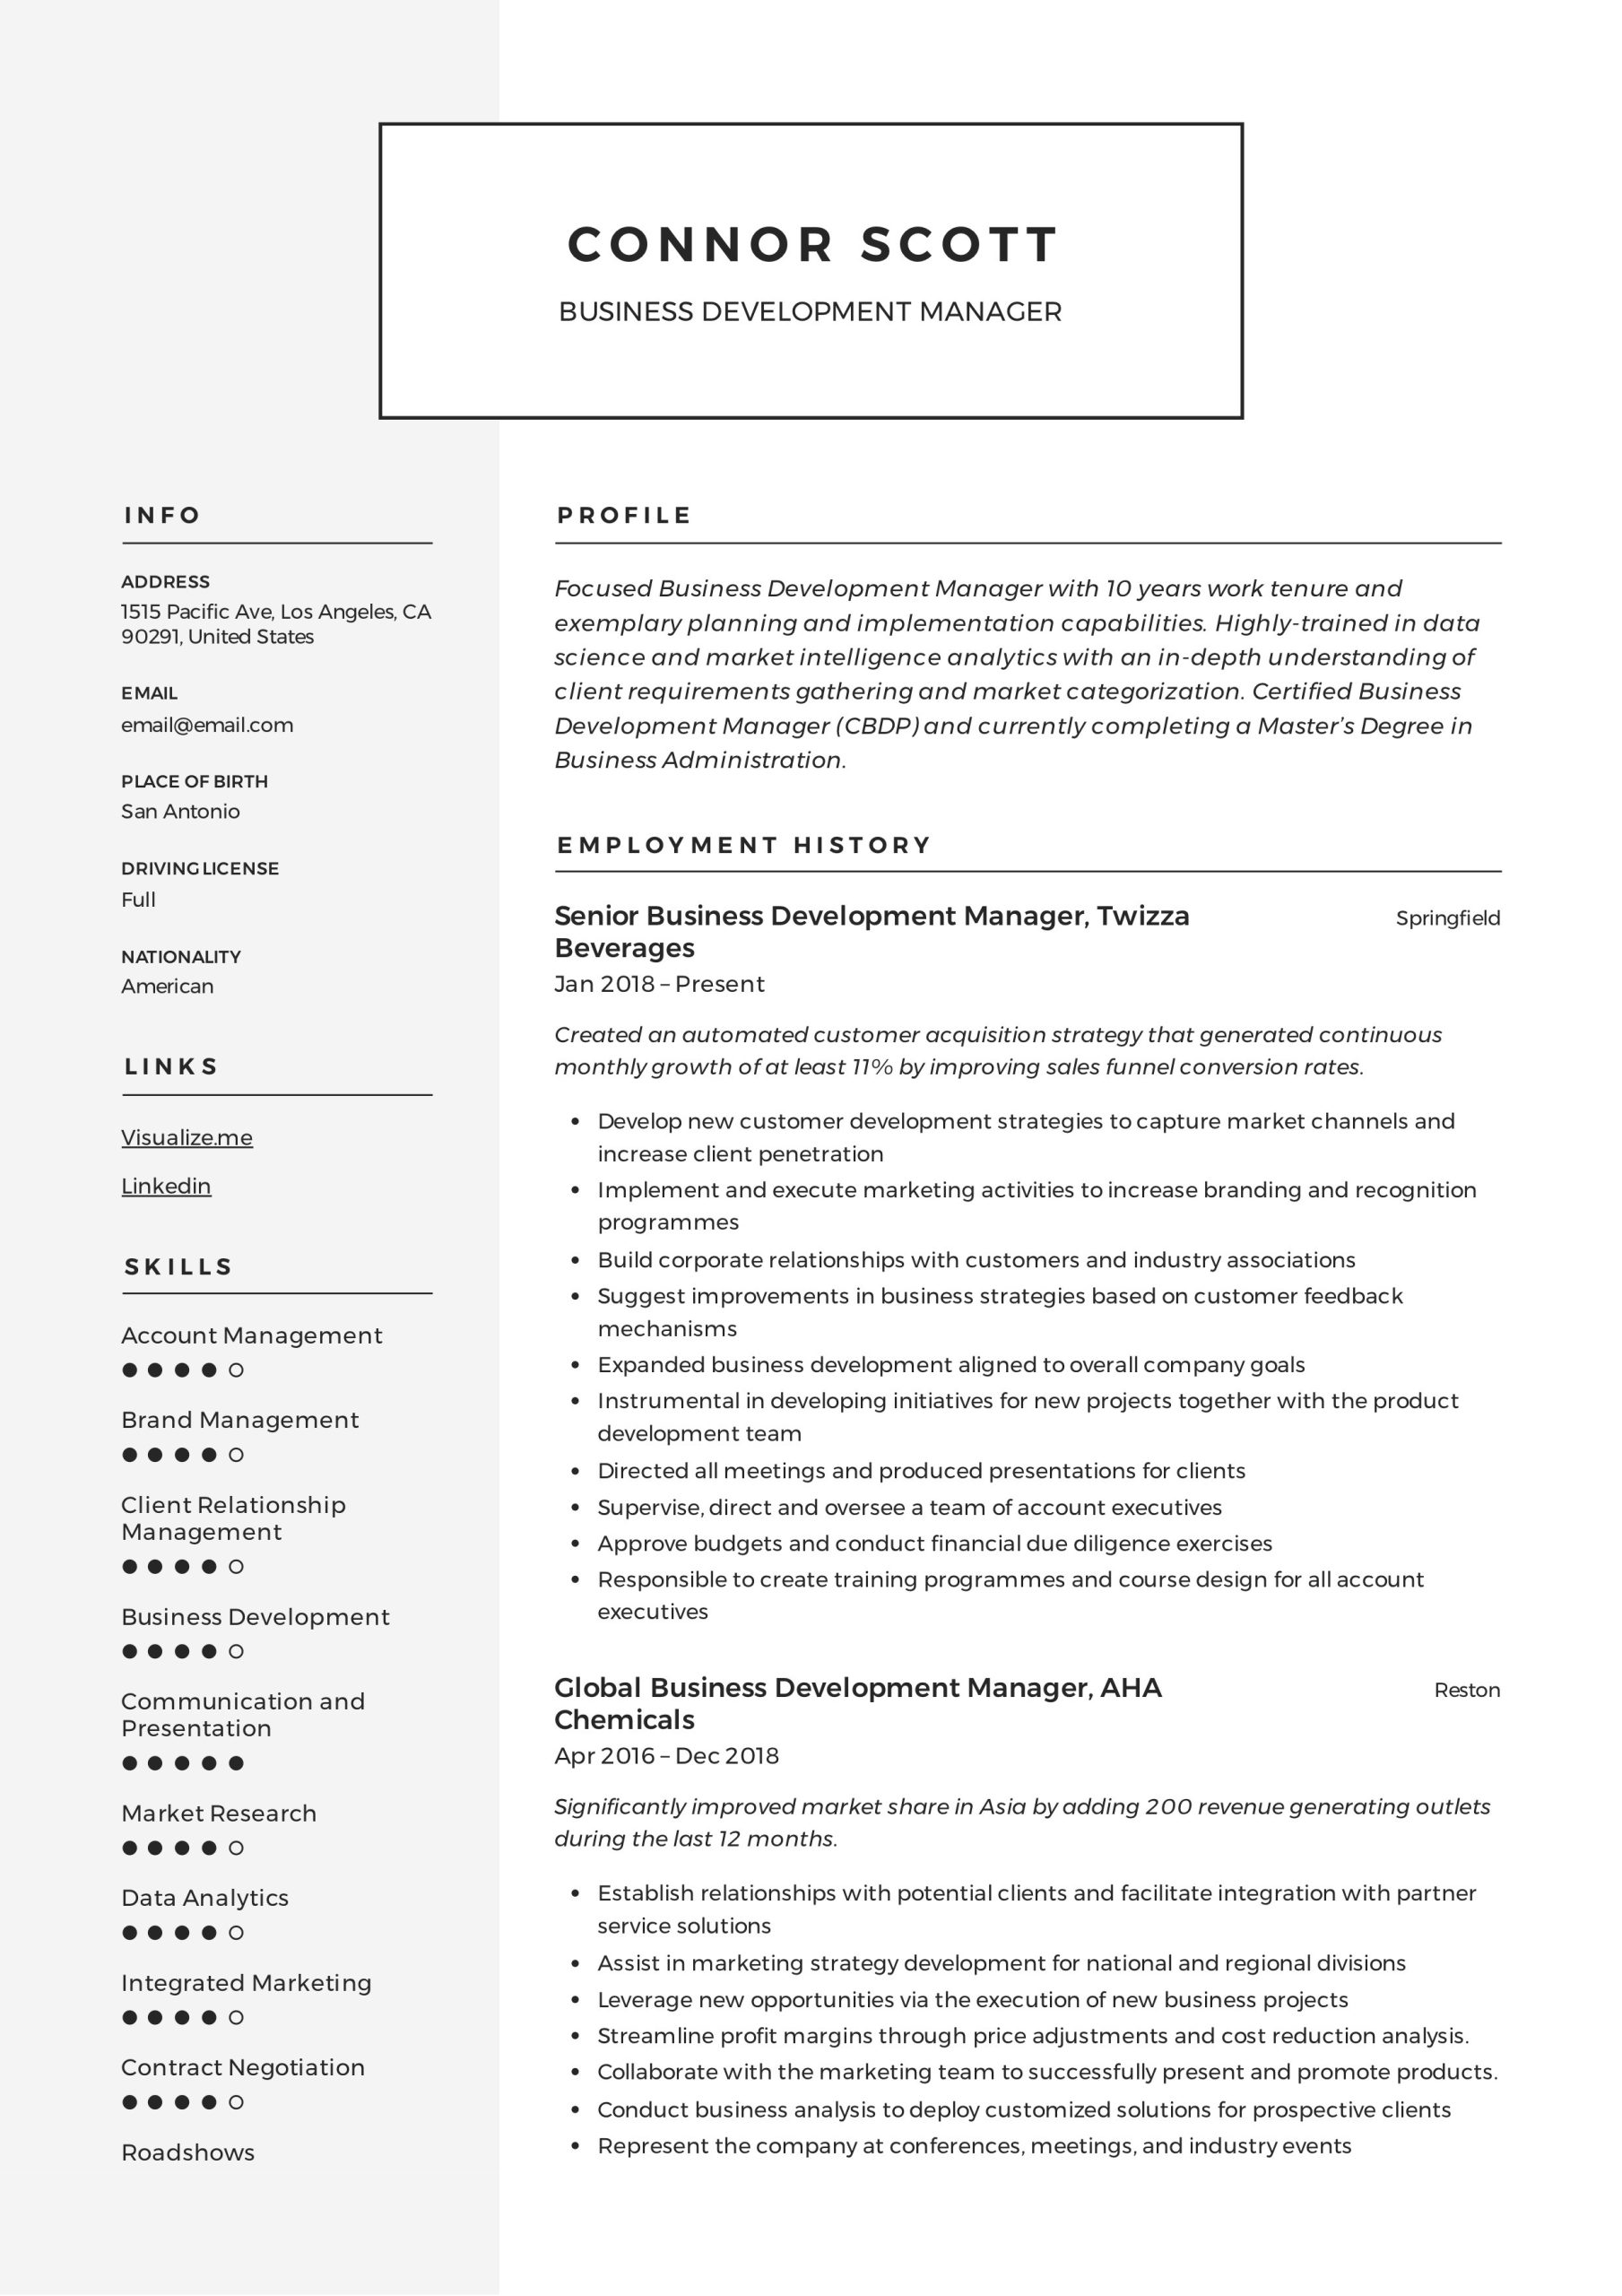 Business Develop Ent Engineer Sample Resume Business Development Manager Resume & Guide 2022